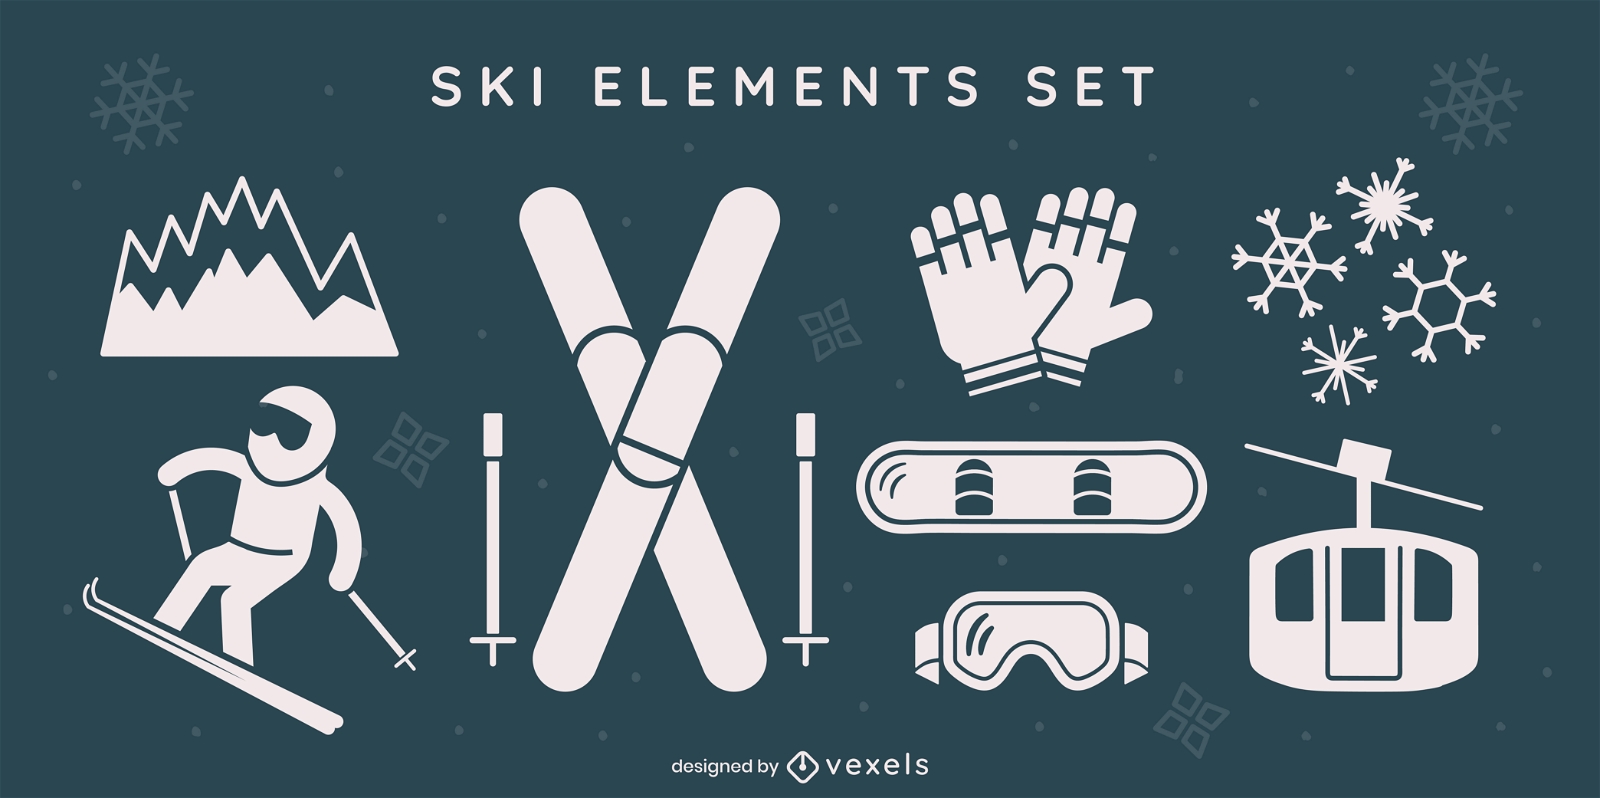 Ski winter sport icon elements set